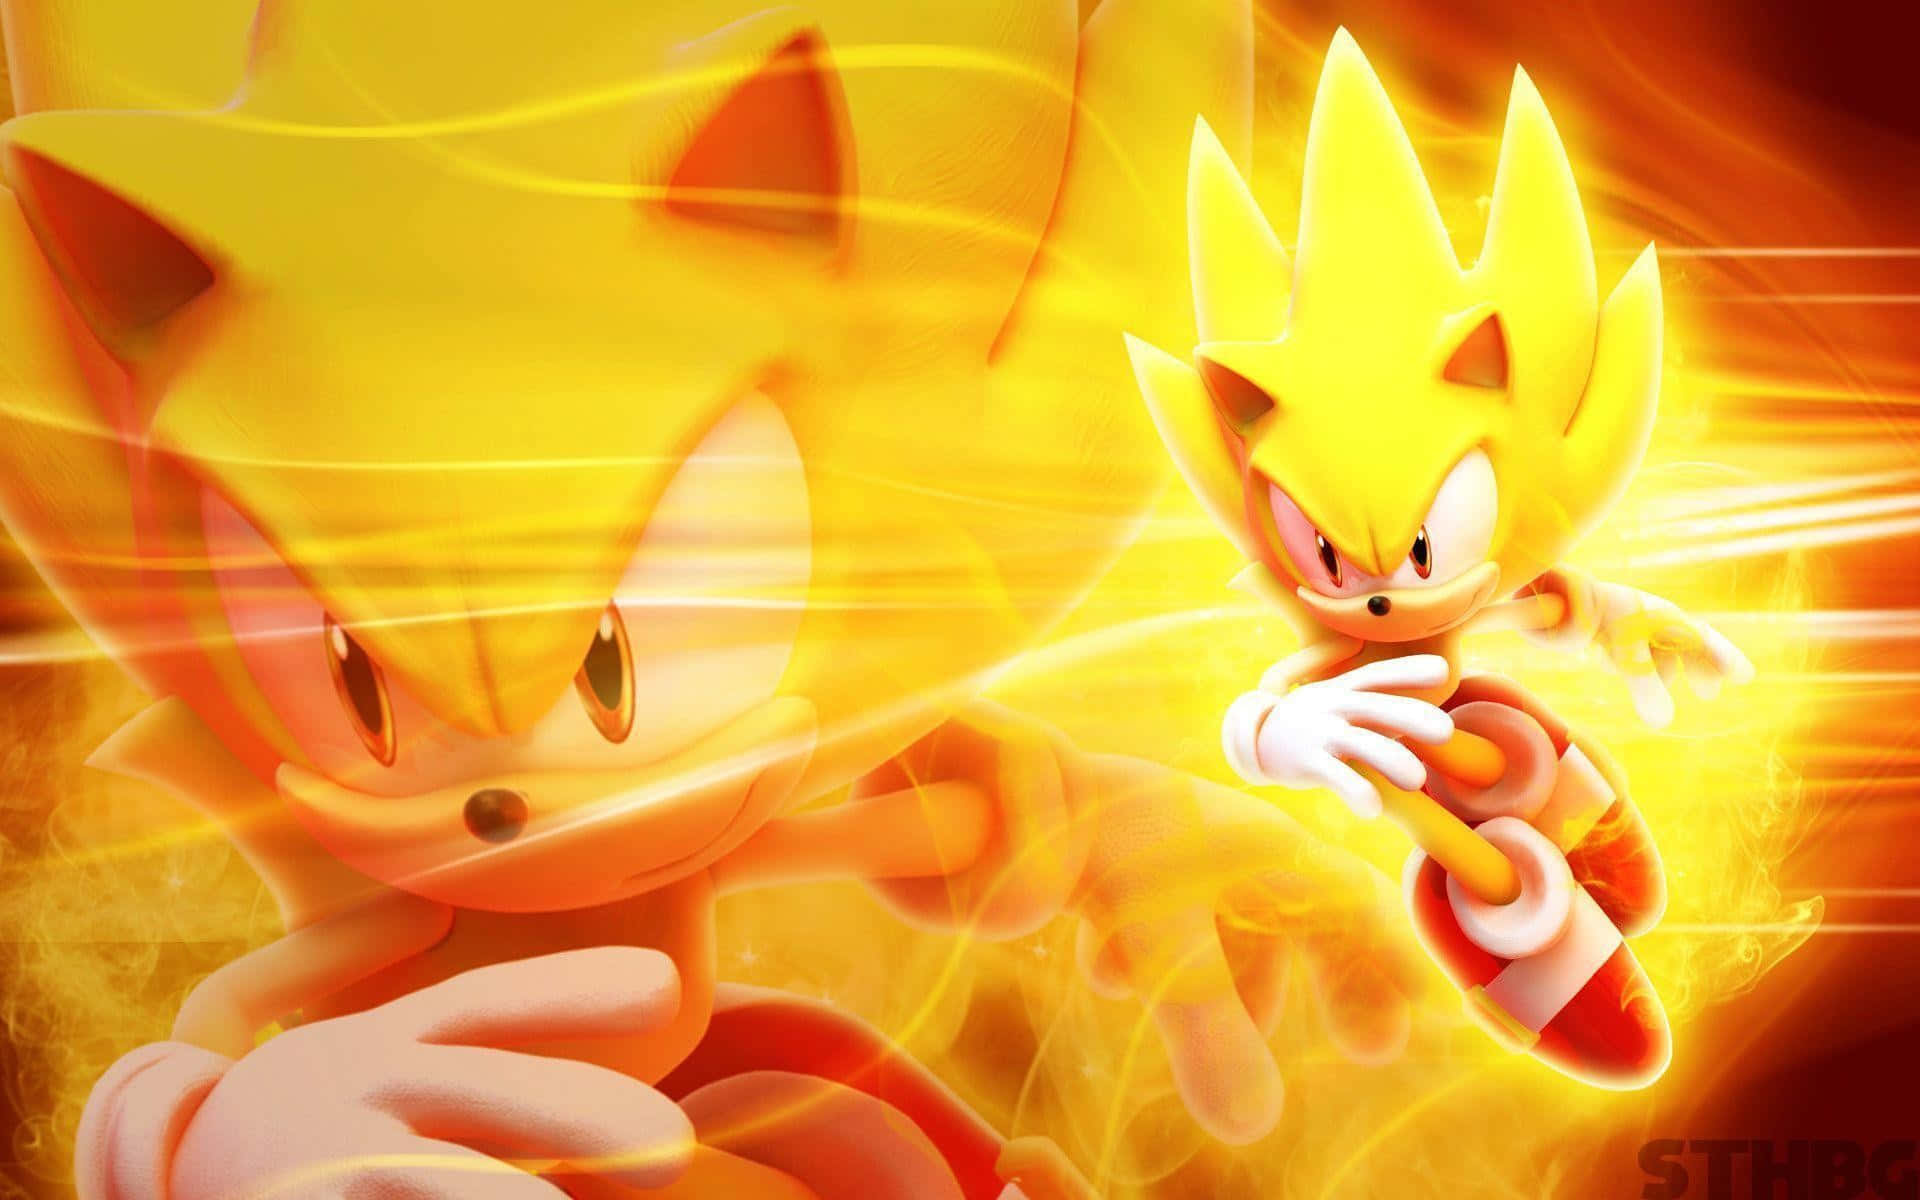 Super Sonic Background